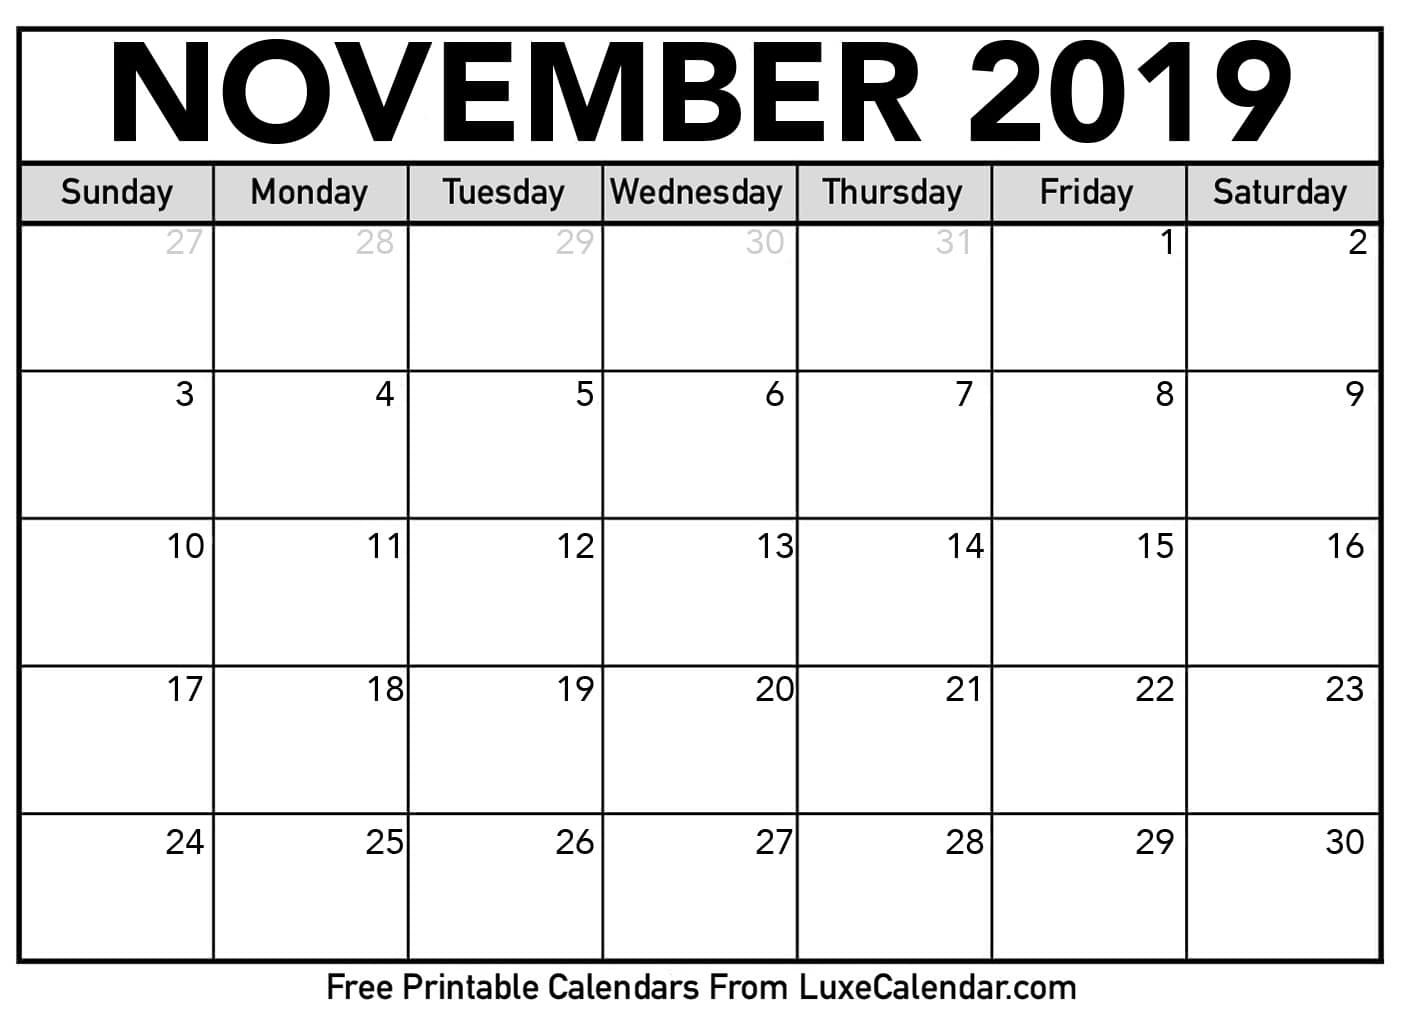 Get Free Printable November Calendar